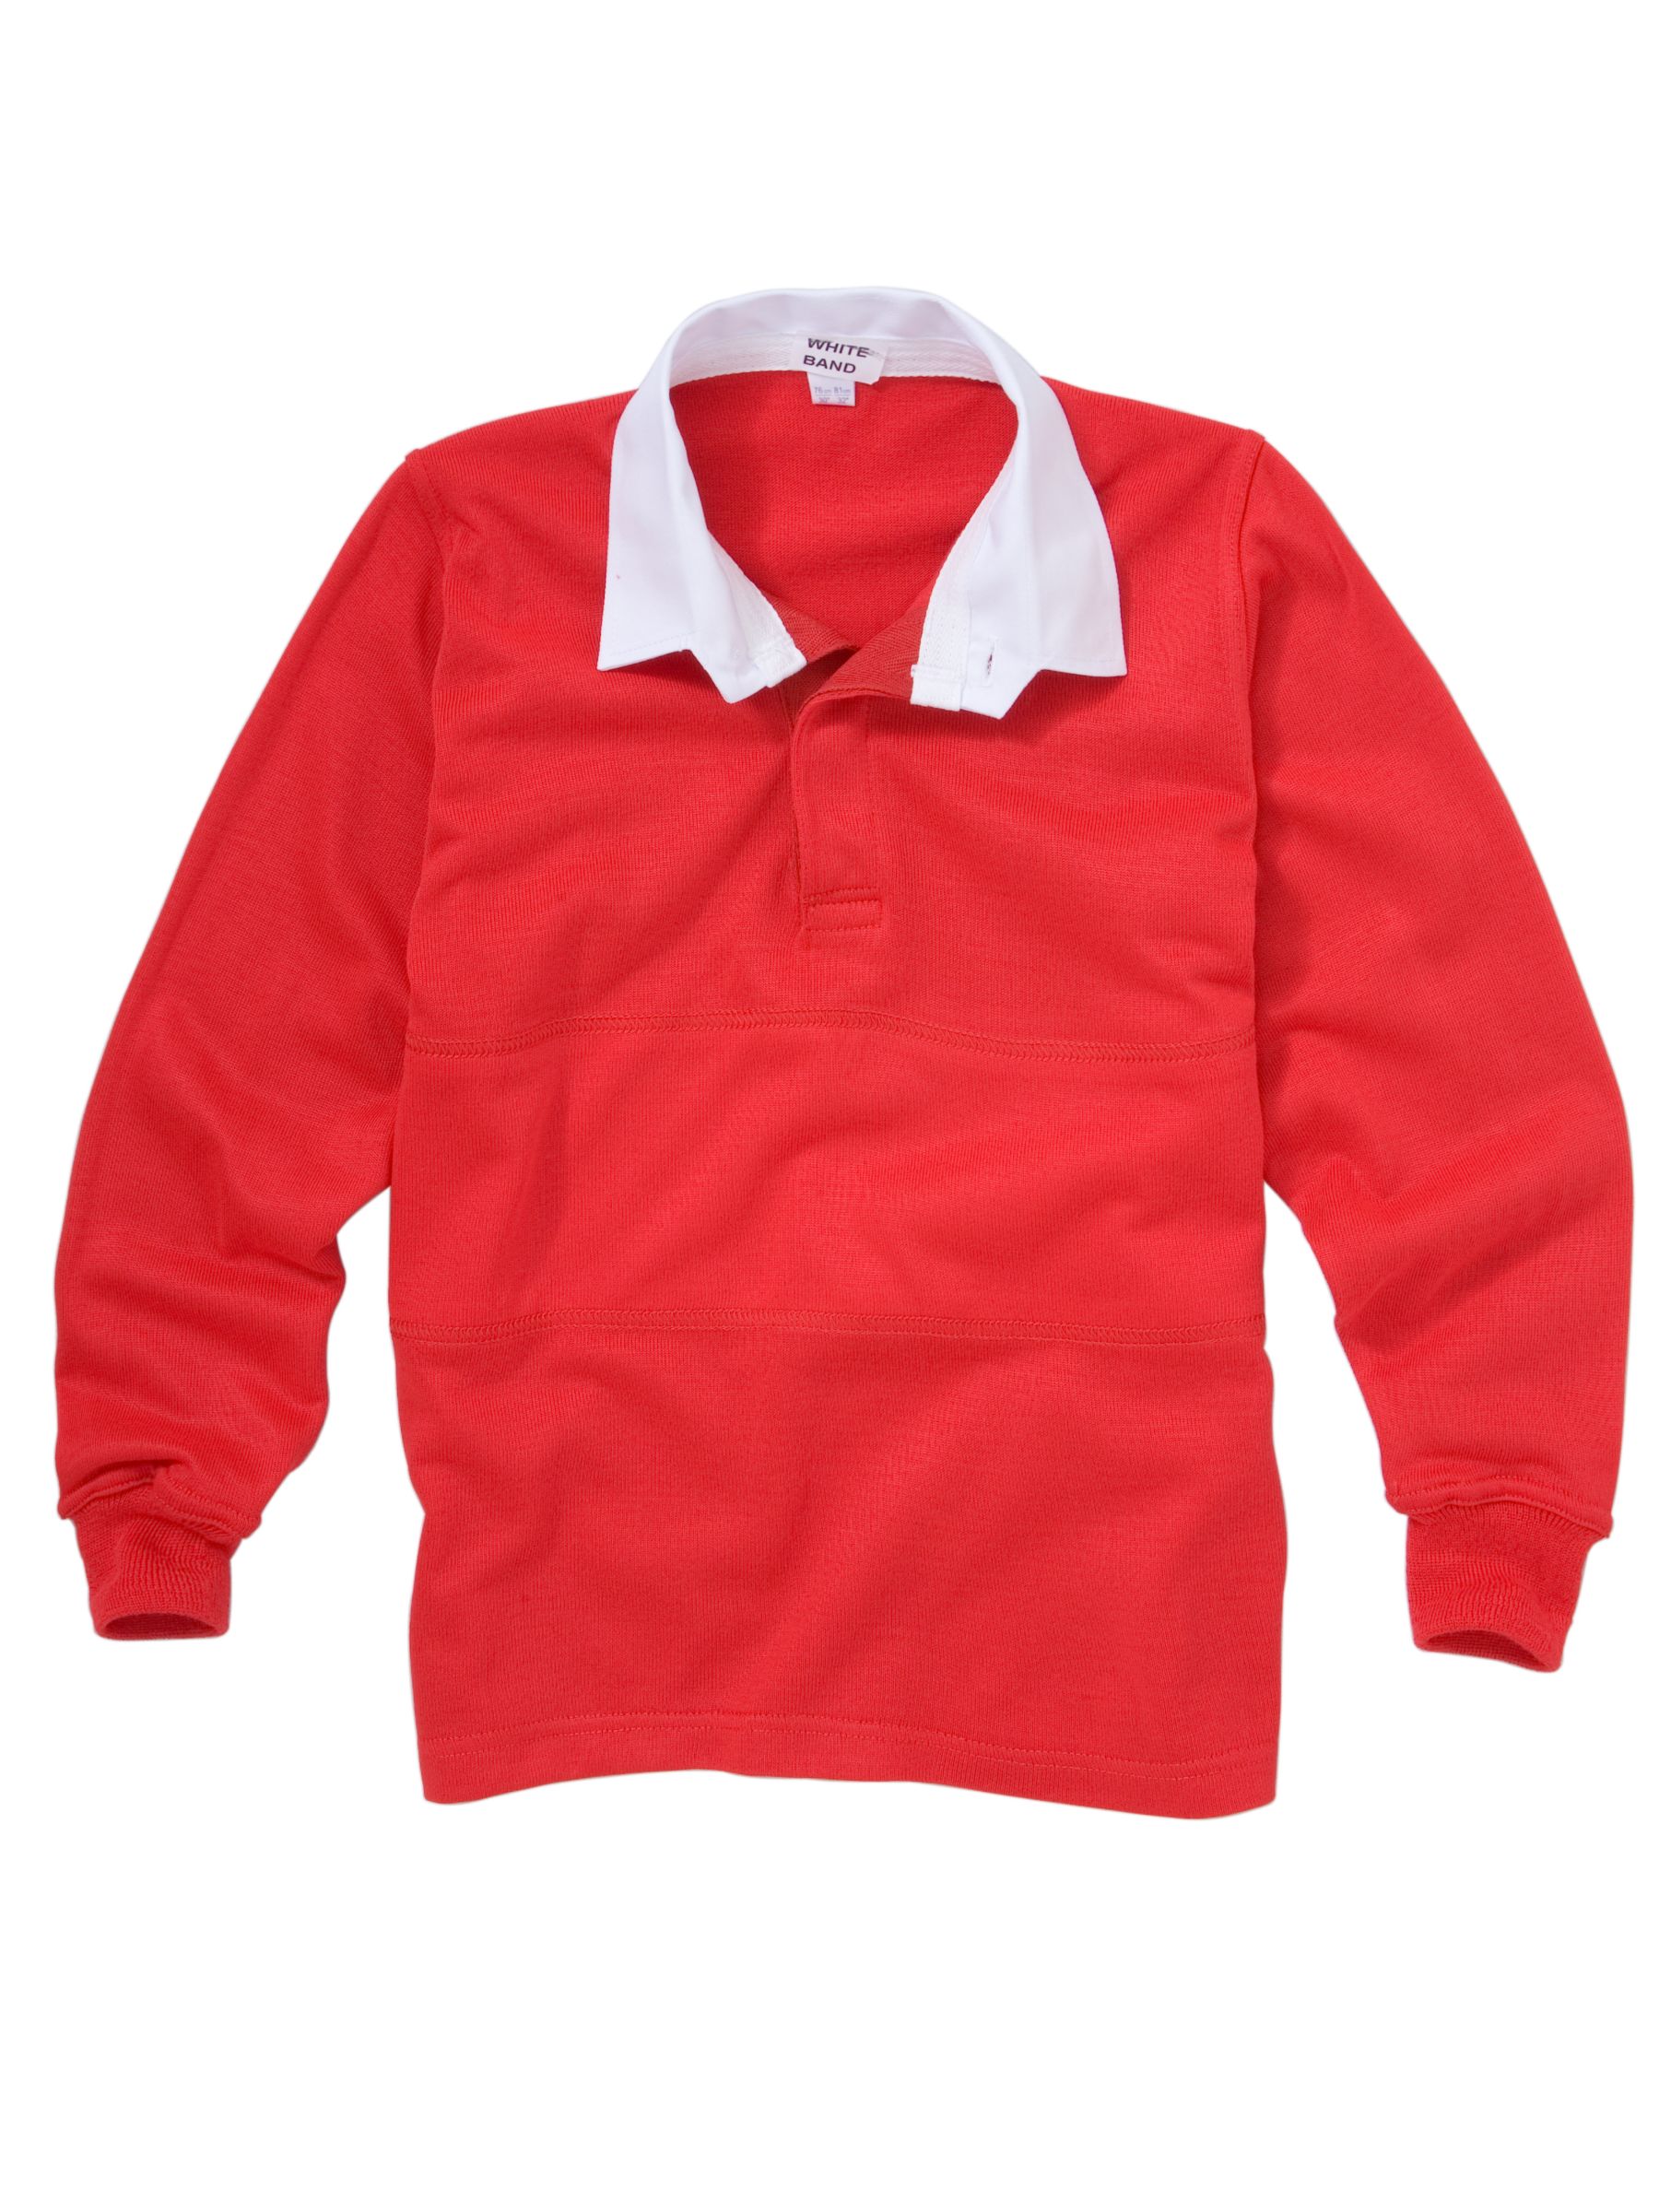 School Boys Rugby Shirt, Red